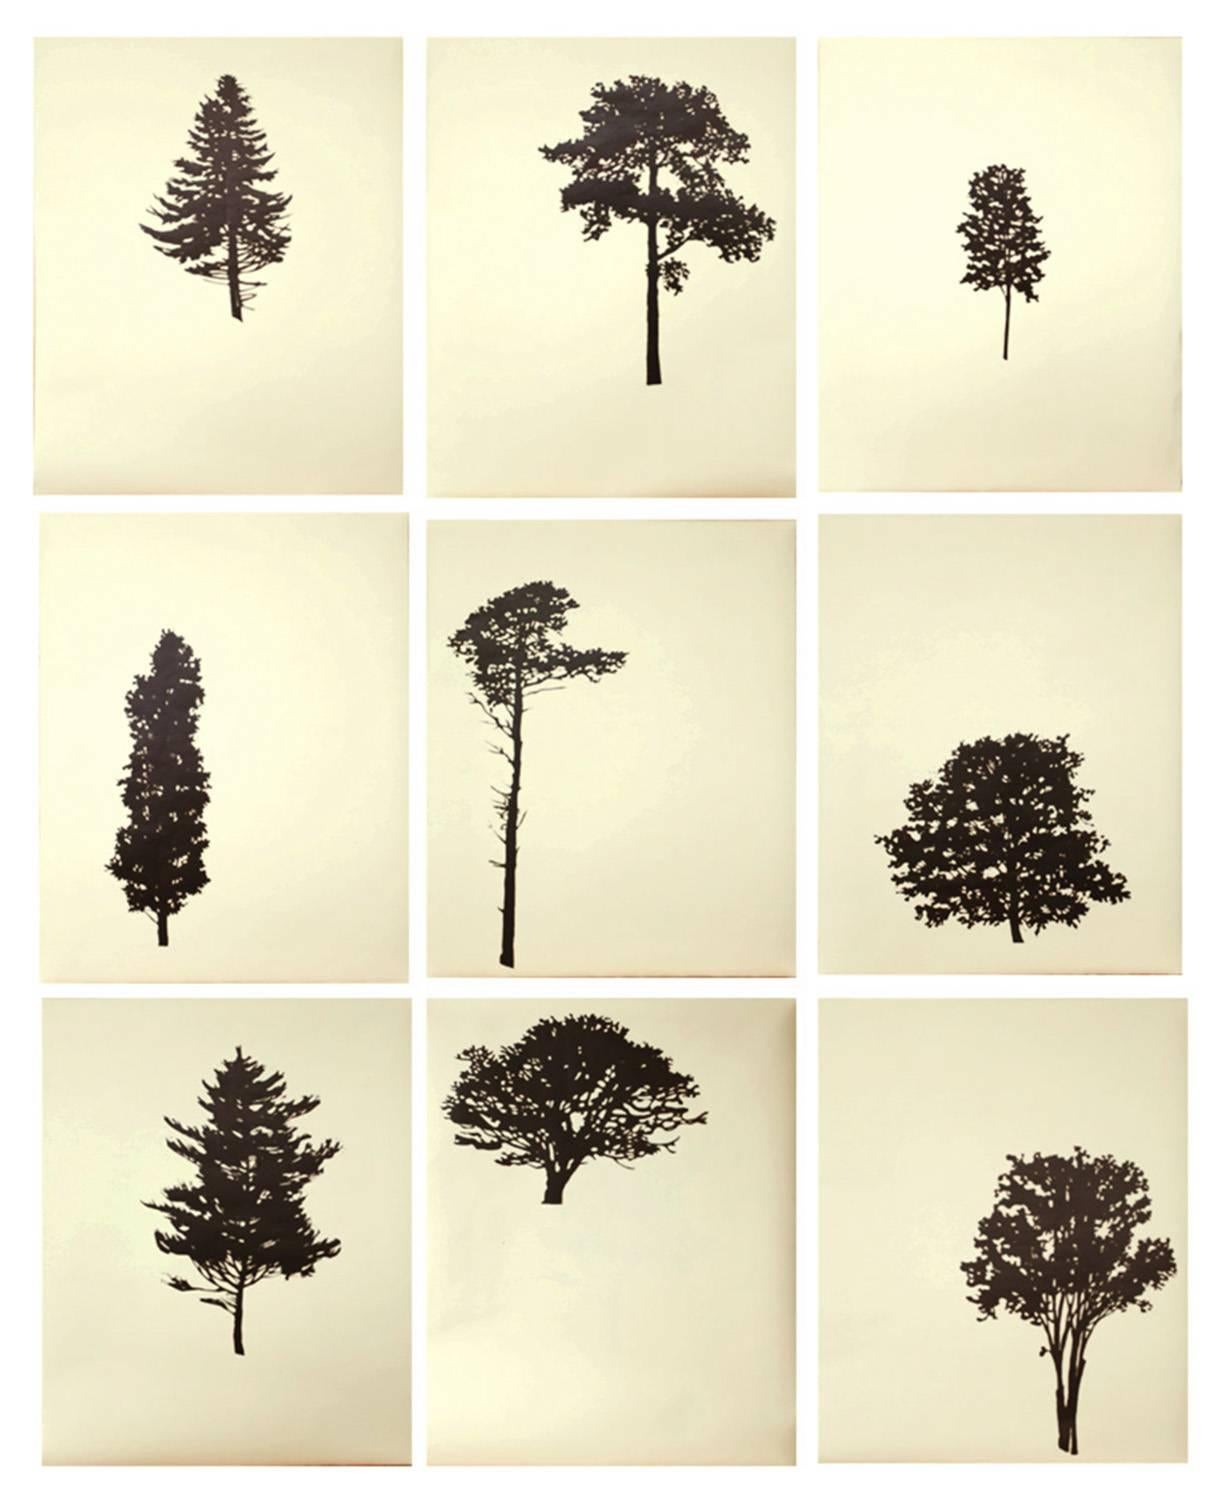 Der Wald - Contemporary Print by Peter Hoffer